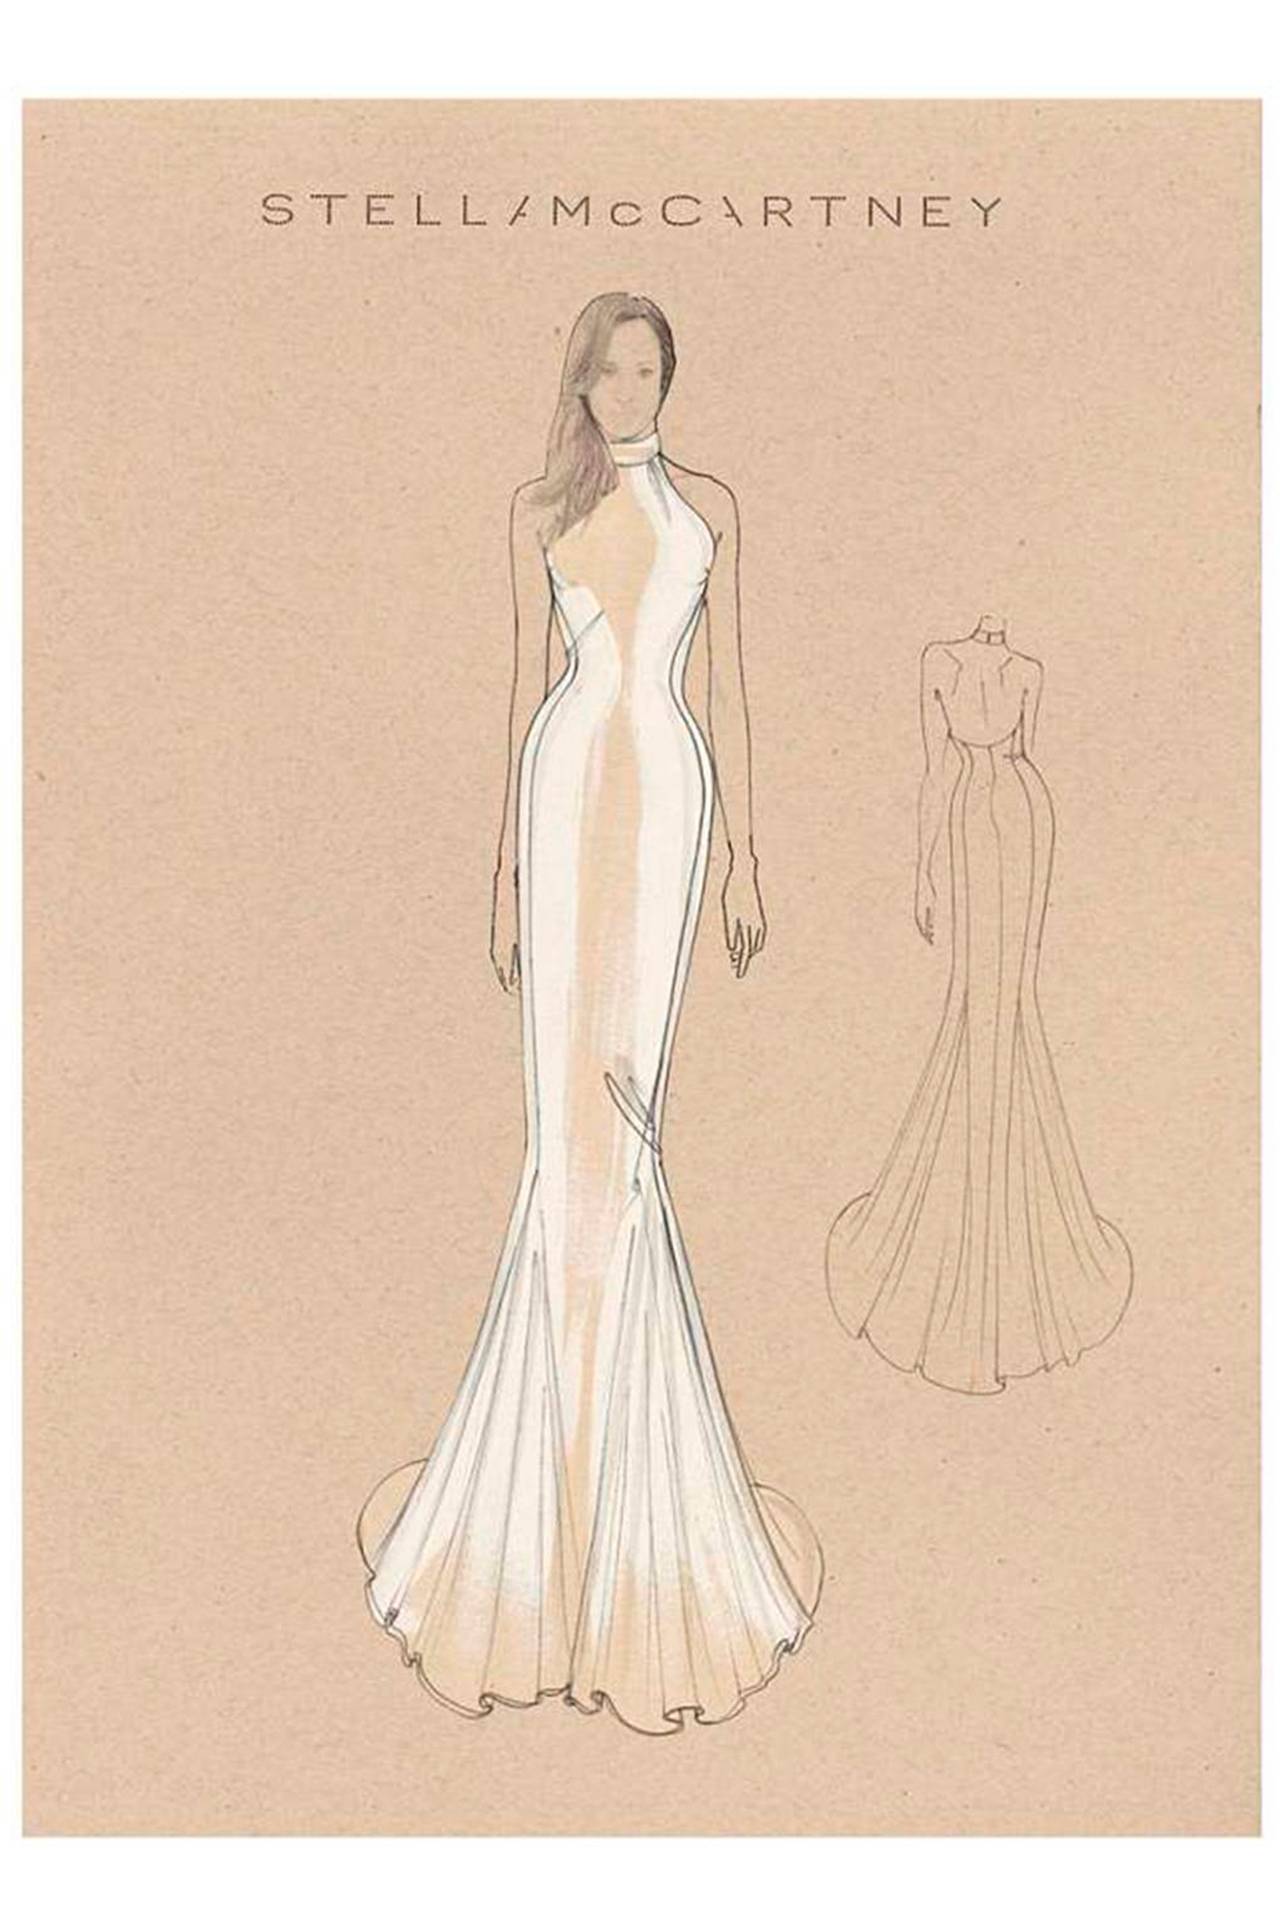 top bridal dress designers